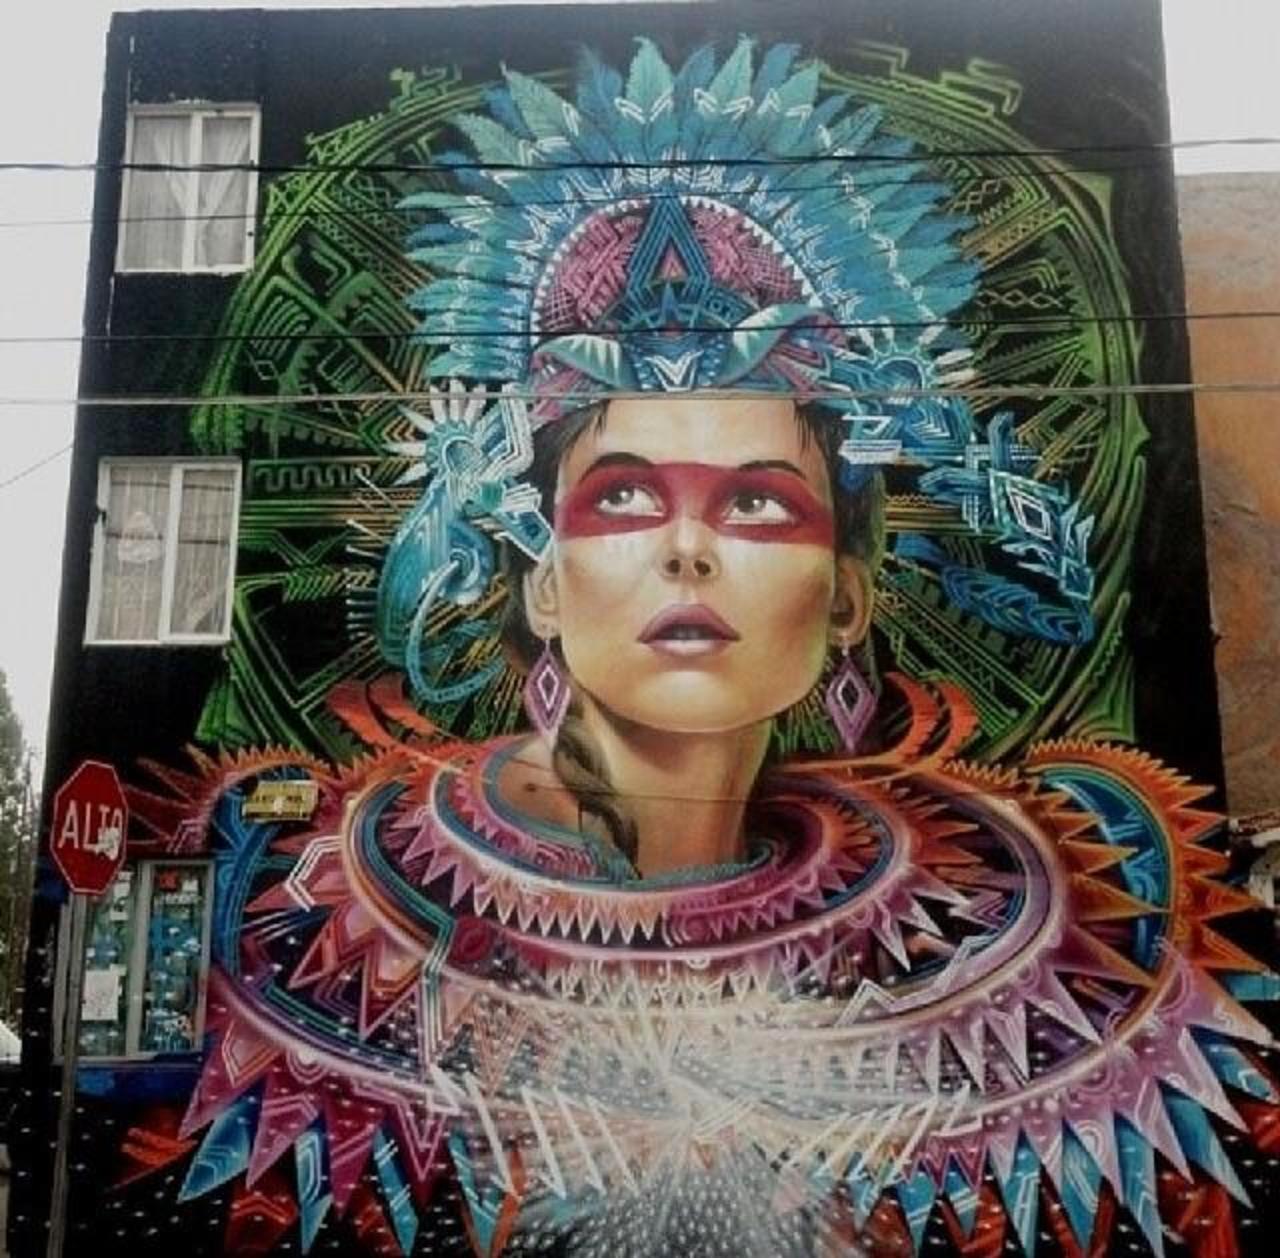 ": Artist 'Espectral Cauac Azul' glorious large scale Street Art in Mexico 

#art #graffiti #mural #streetart http://t.co/IgVzPTfD78"